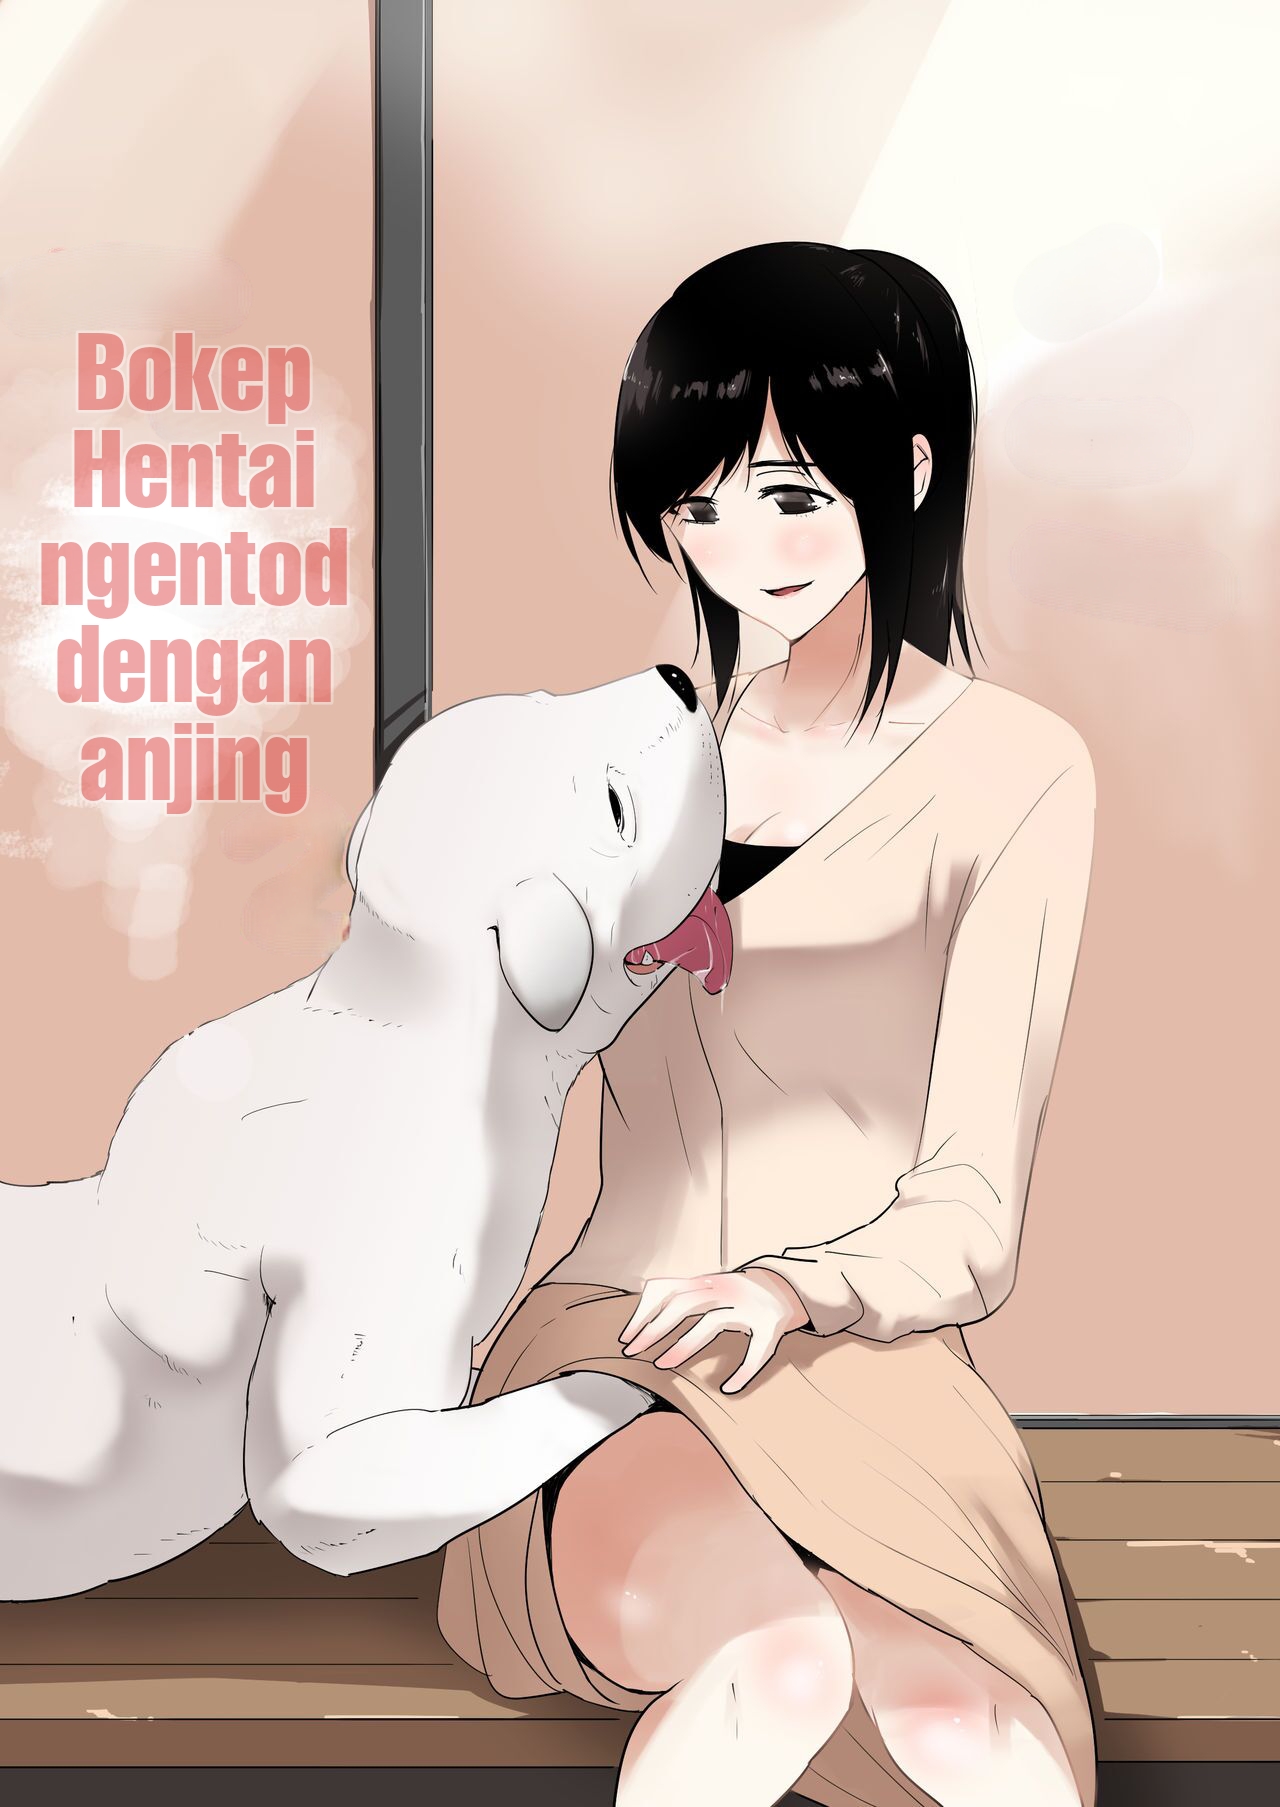 Bokep Hentai Ngentod Dengan Anjing - Mihentai.com